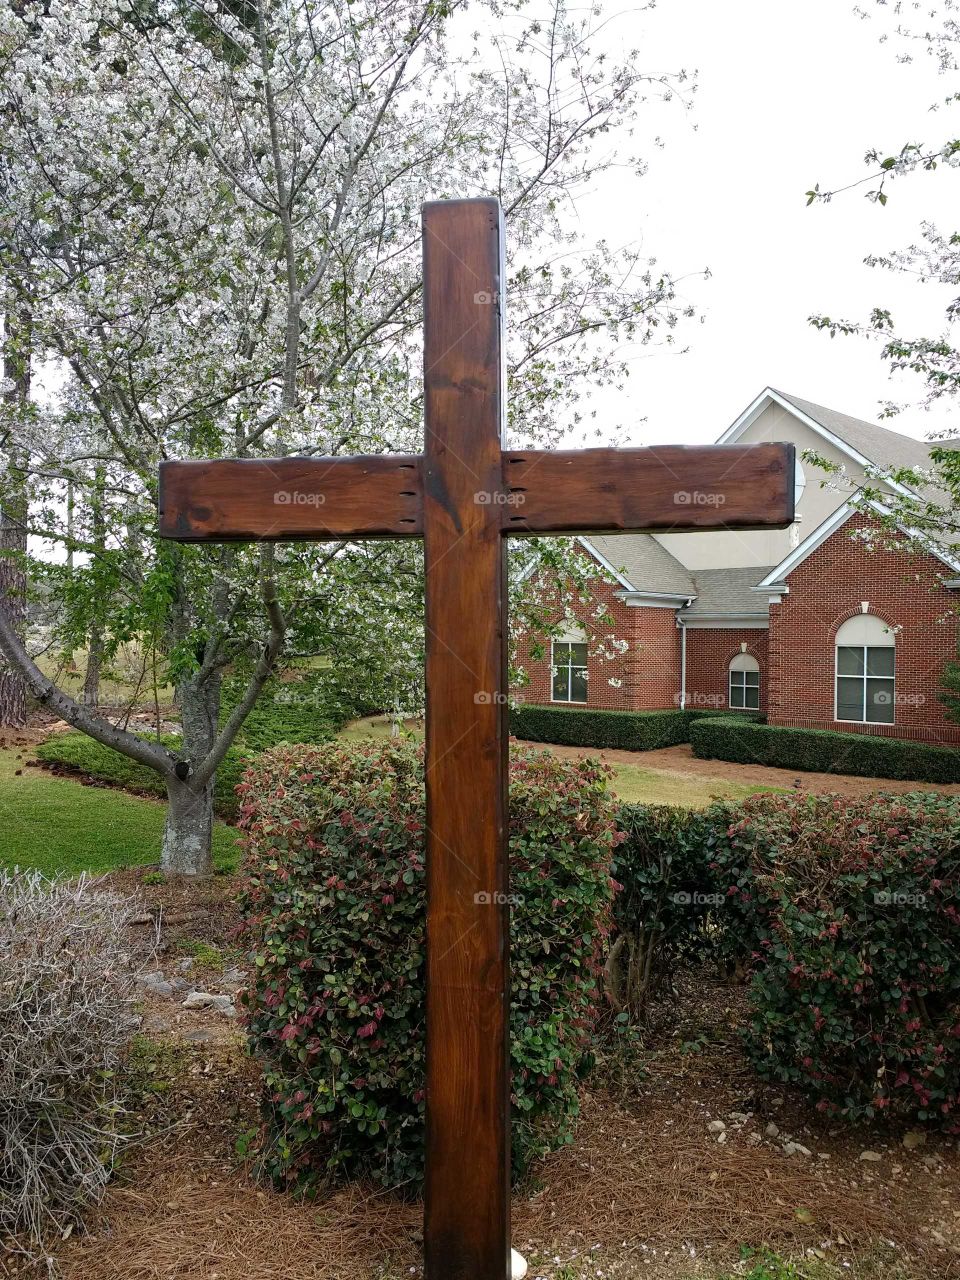 Presbyterian church cross and cheery blossoms